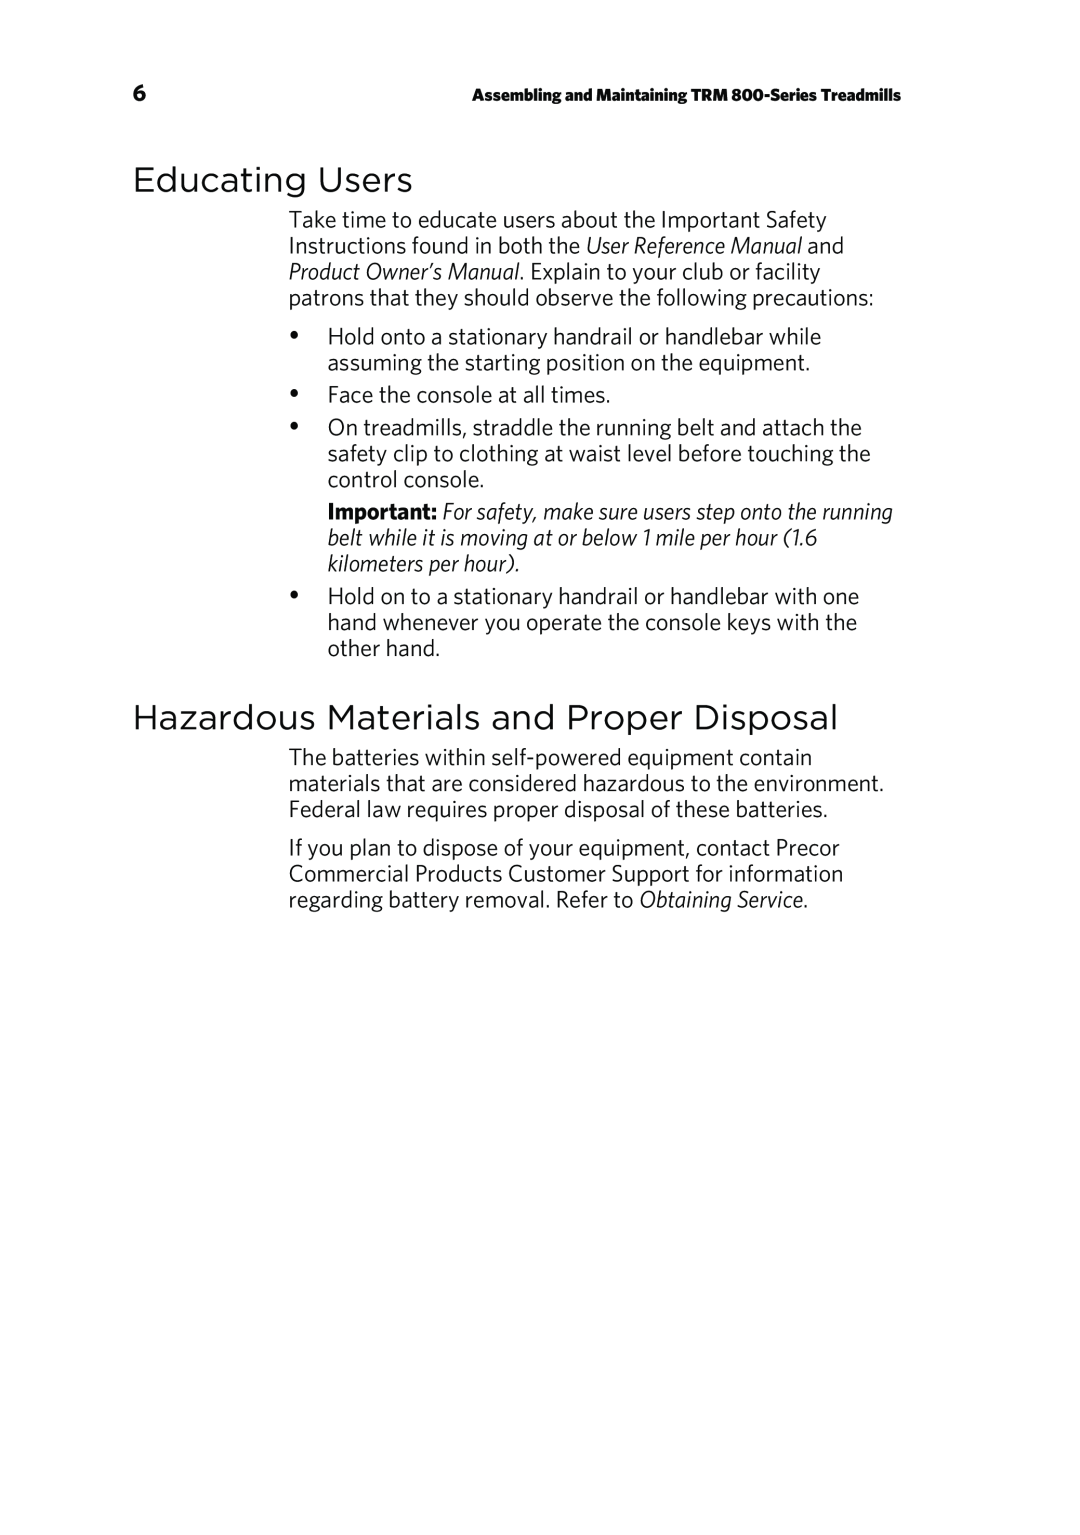 Precor P80 manual Educating Users, Hazardous Materials and Proper Disposal 